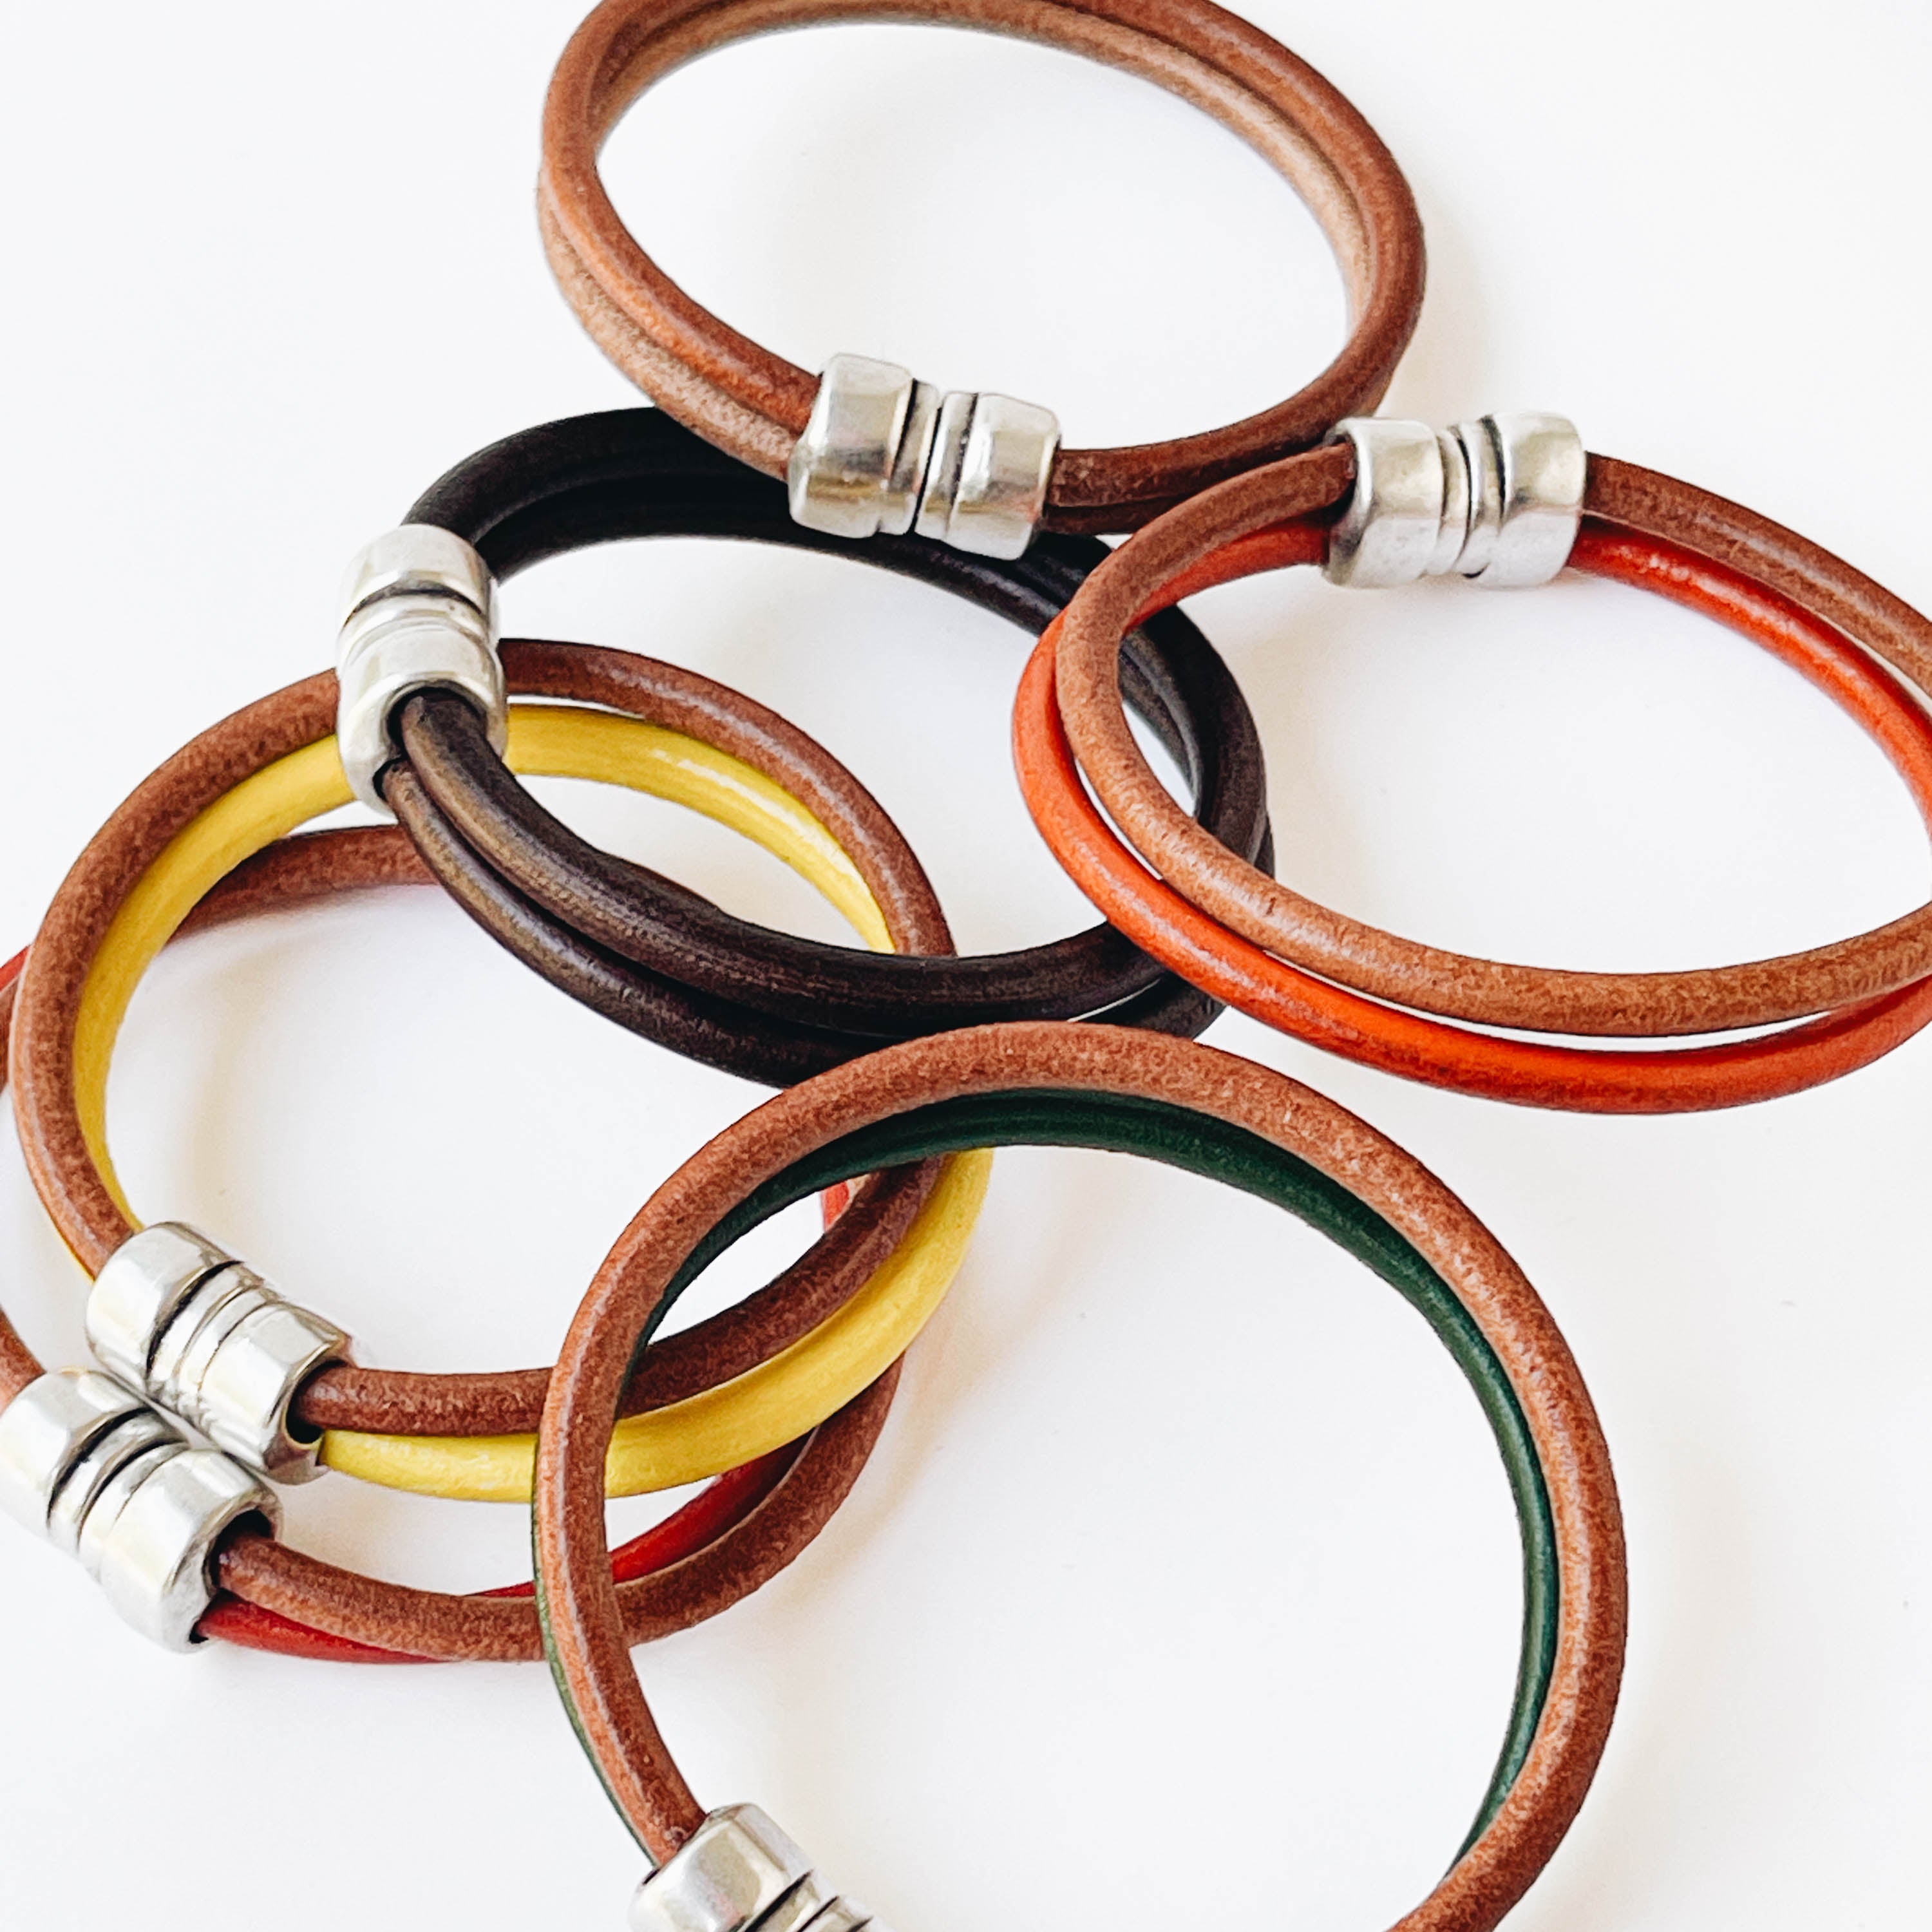 Shop Men's Cord and Leather Bracelets